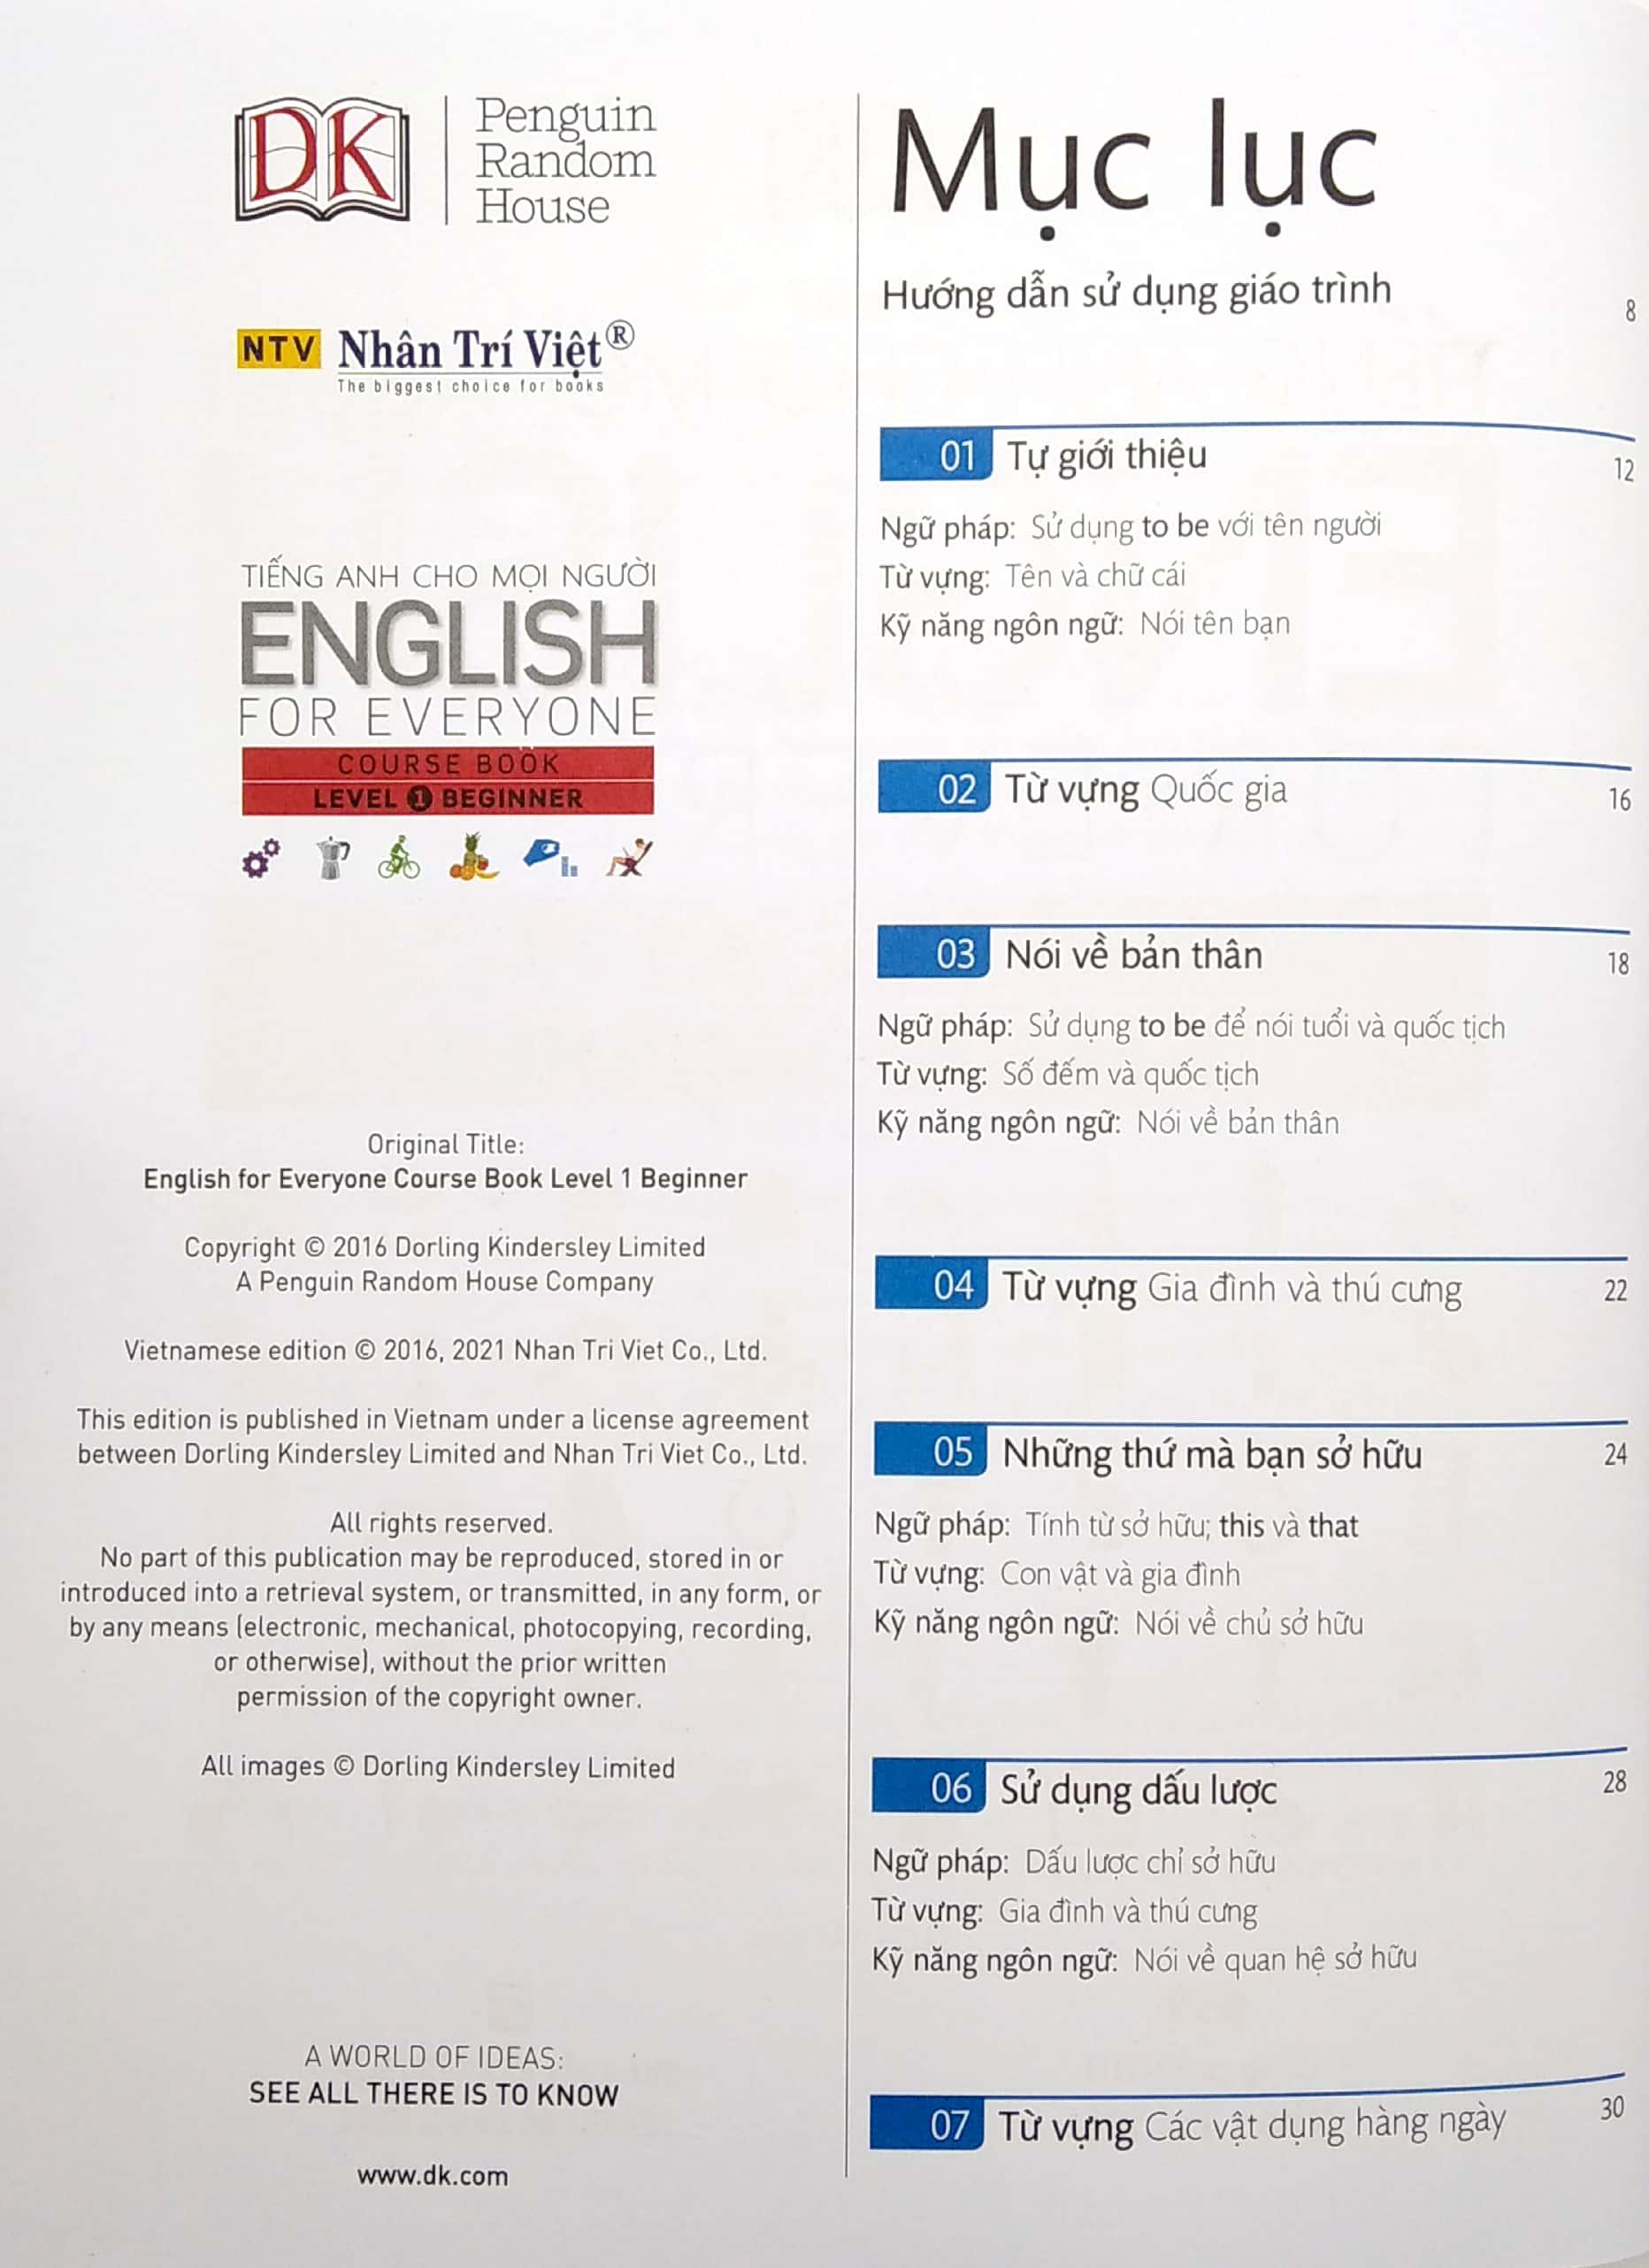 Tiếng Anh Dành Cho Mọi Người - English For Everyone - Level 1 Beginner - Course Book